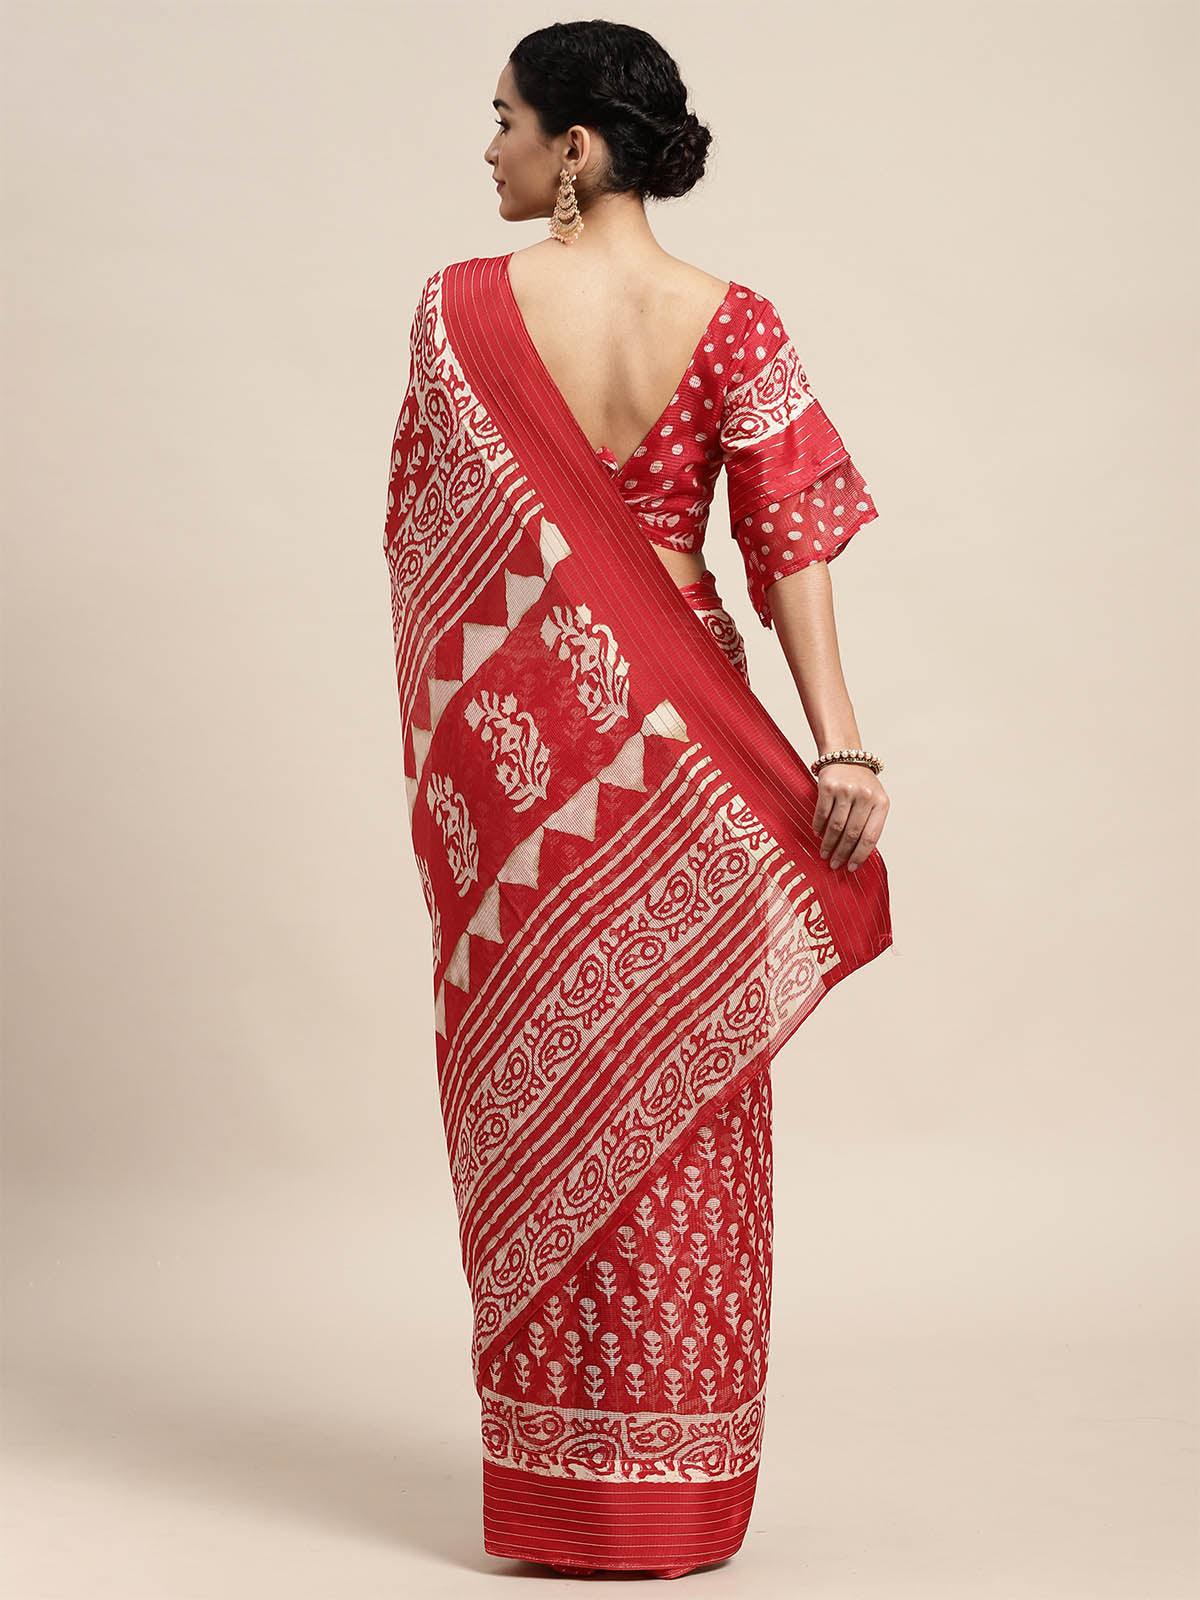 Women's Brasso Red Printed Designer Saree With Blouse Piece - Odette